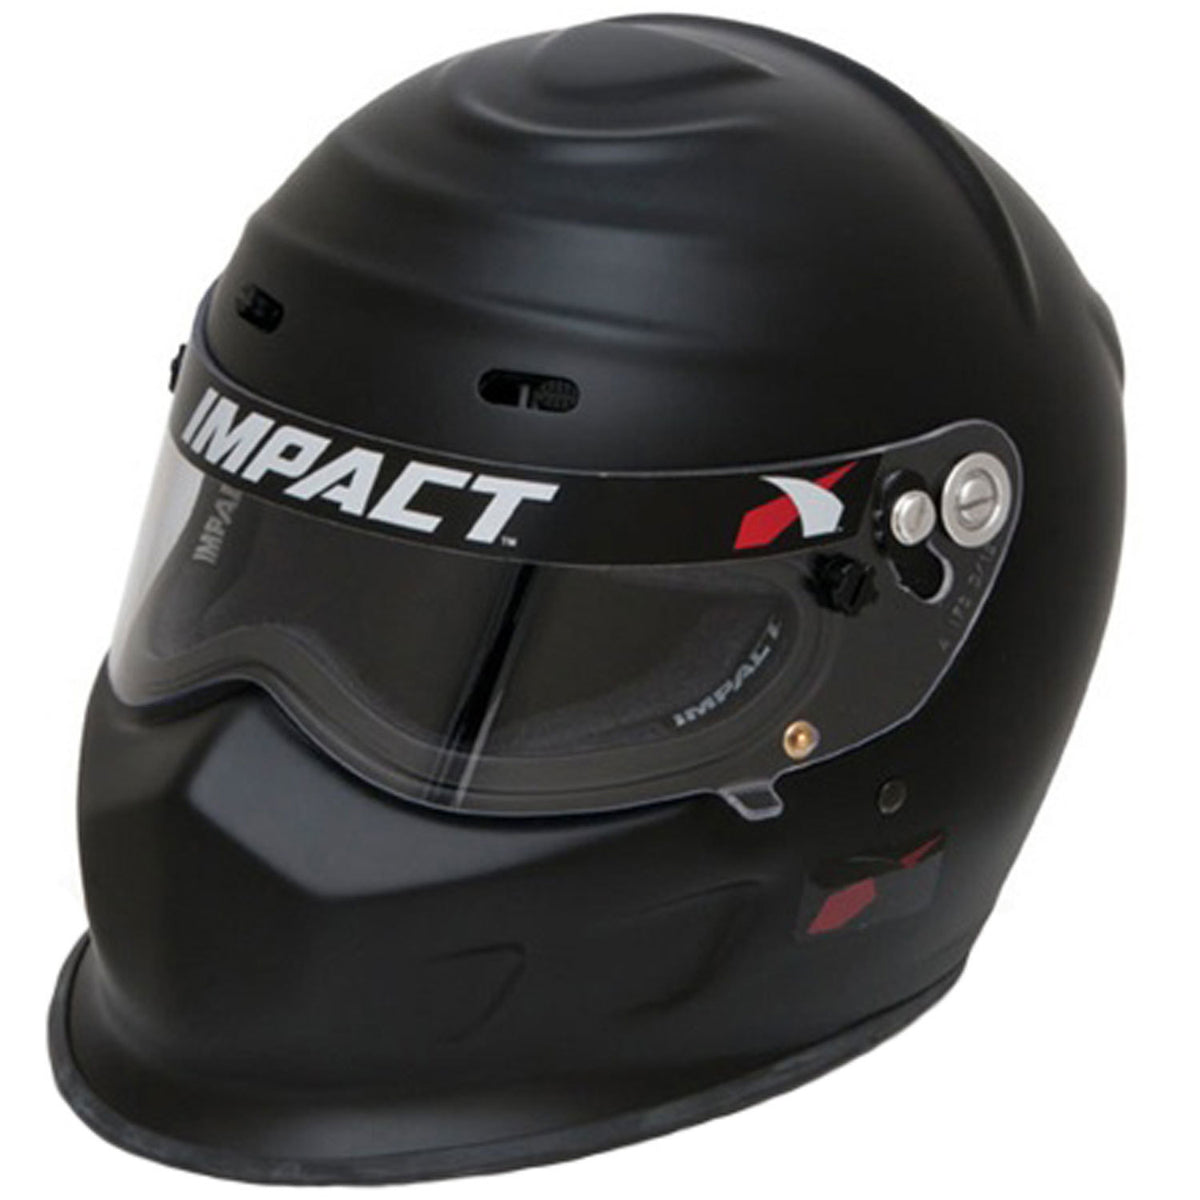 Helmet Champ Large Flat Black SA2020